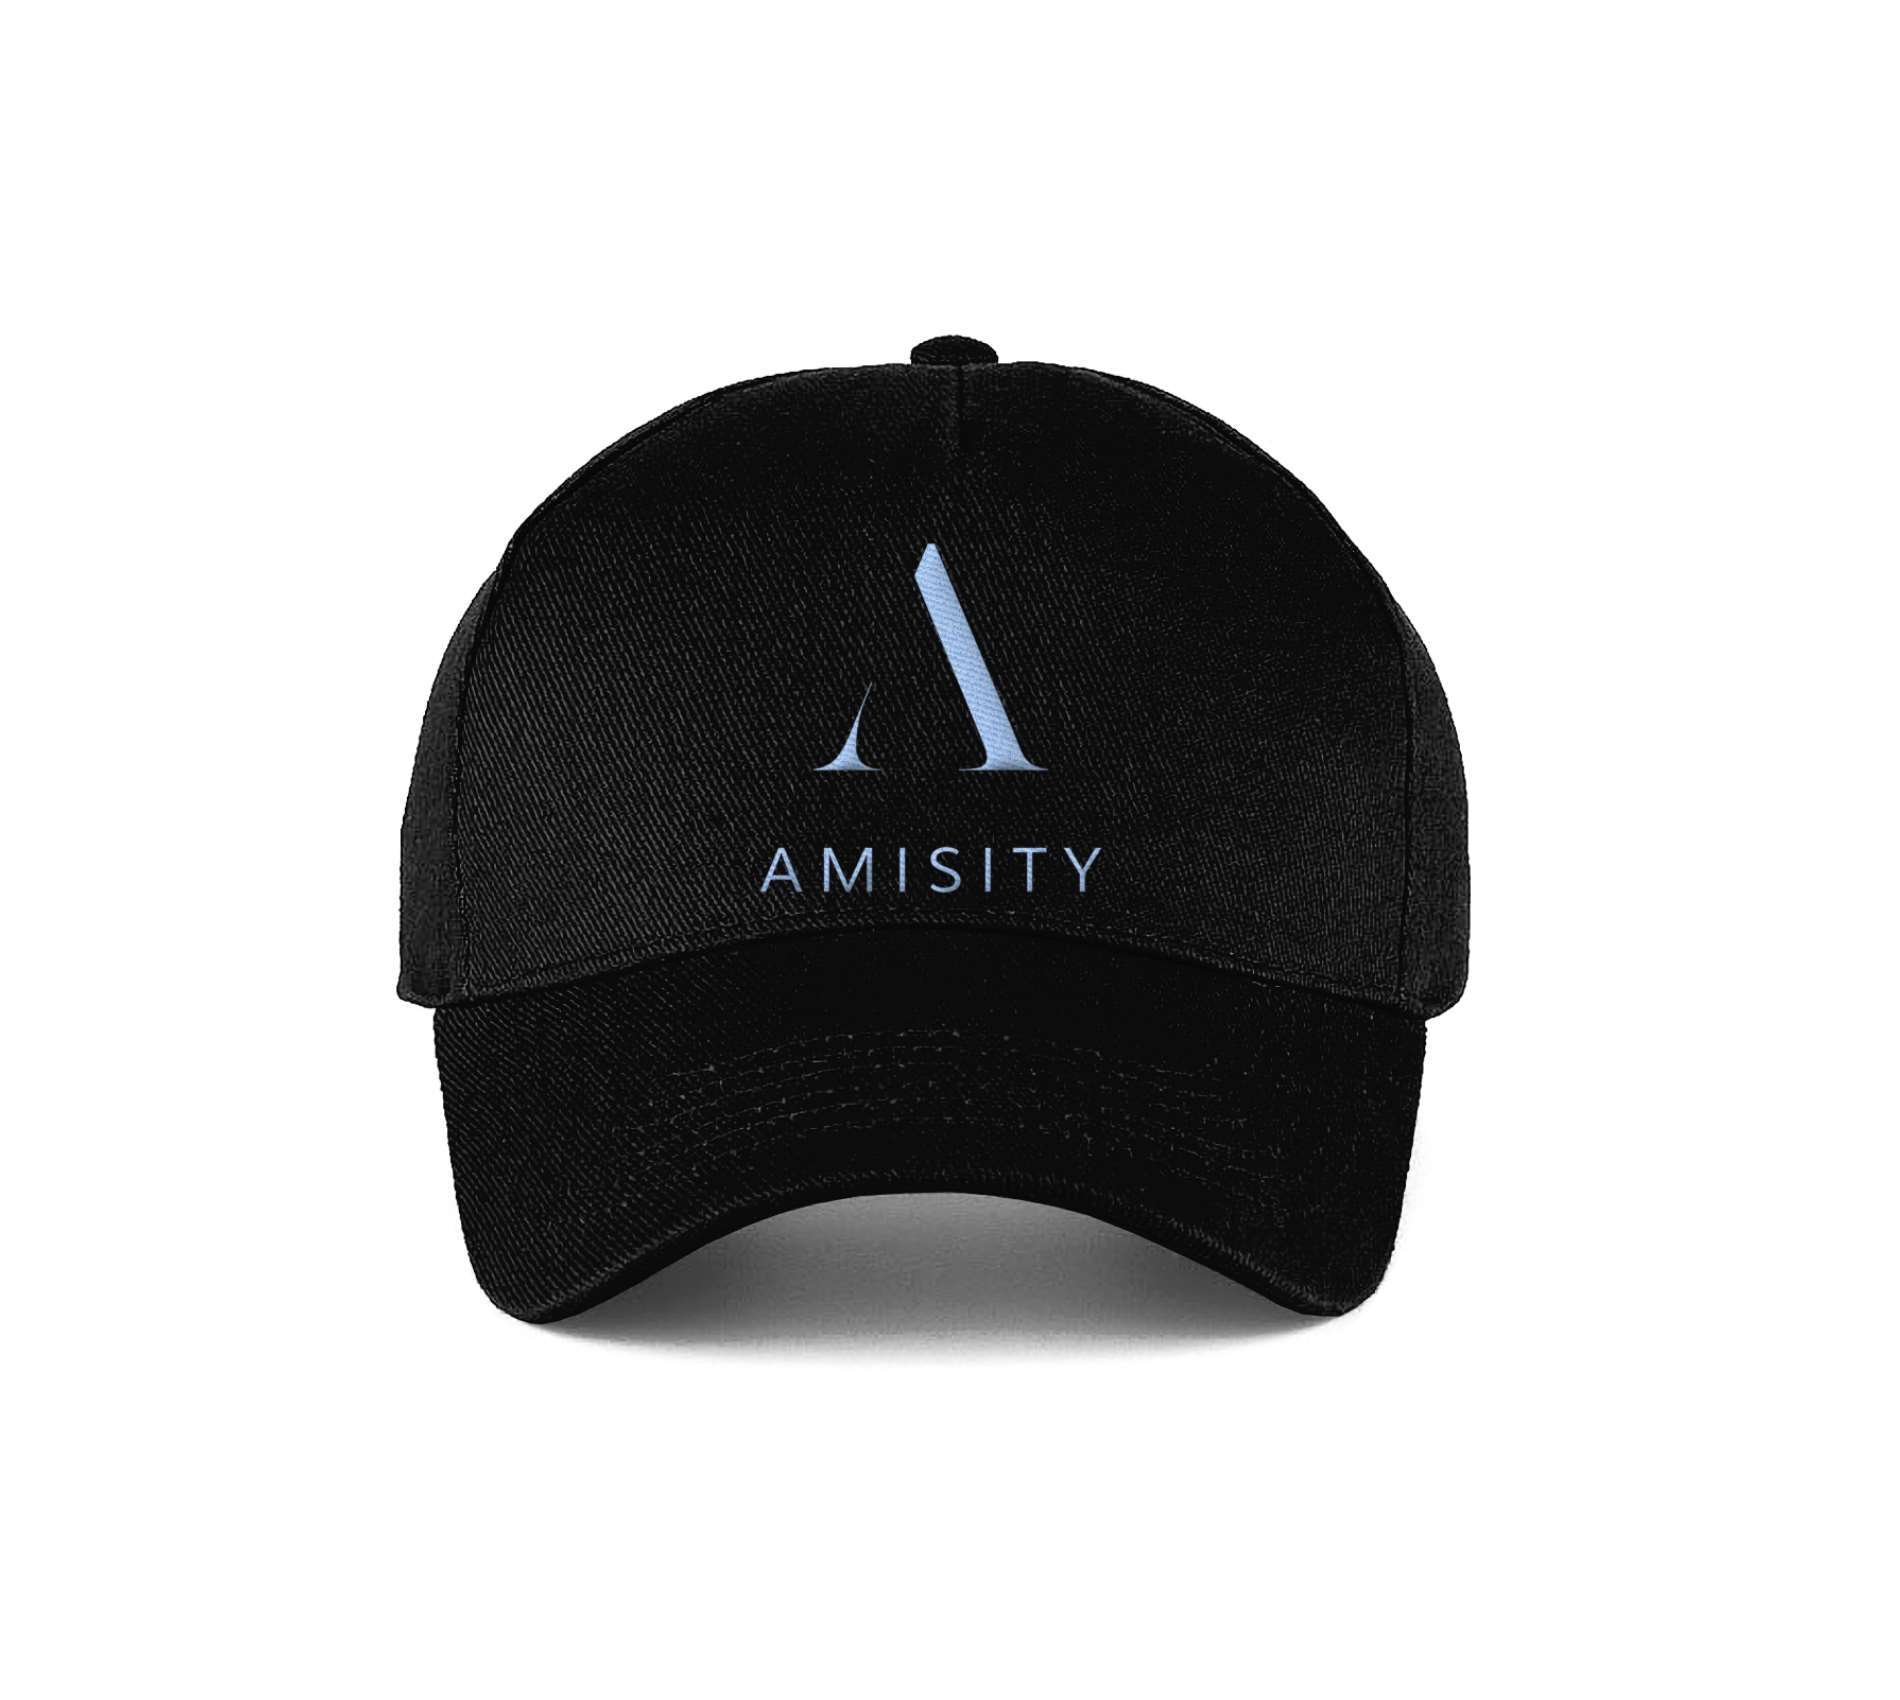 Amisity Ultimate Cotton Unisex Baseball Cap, Fitness Cap, Gym Cap, Travel Cap, Trend Now, UK - Amisity